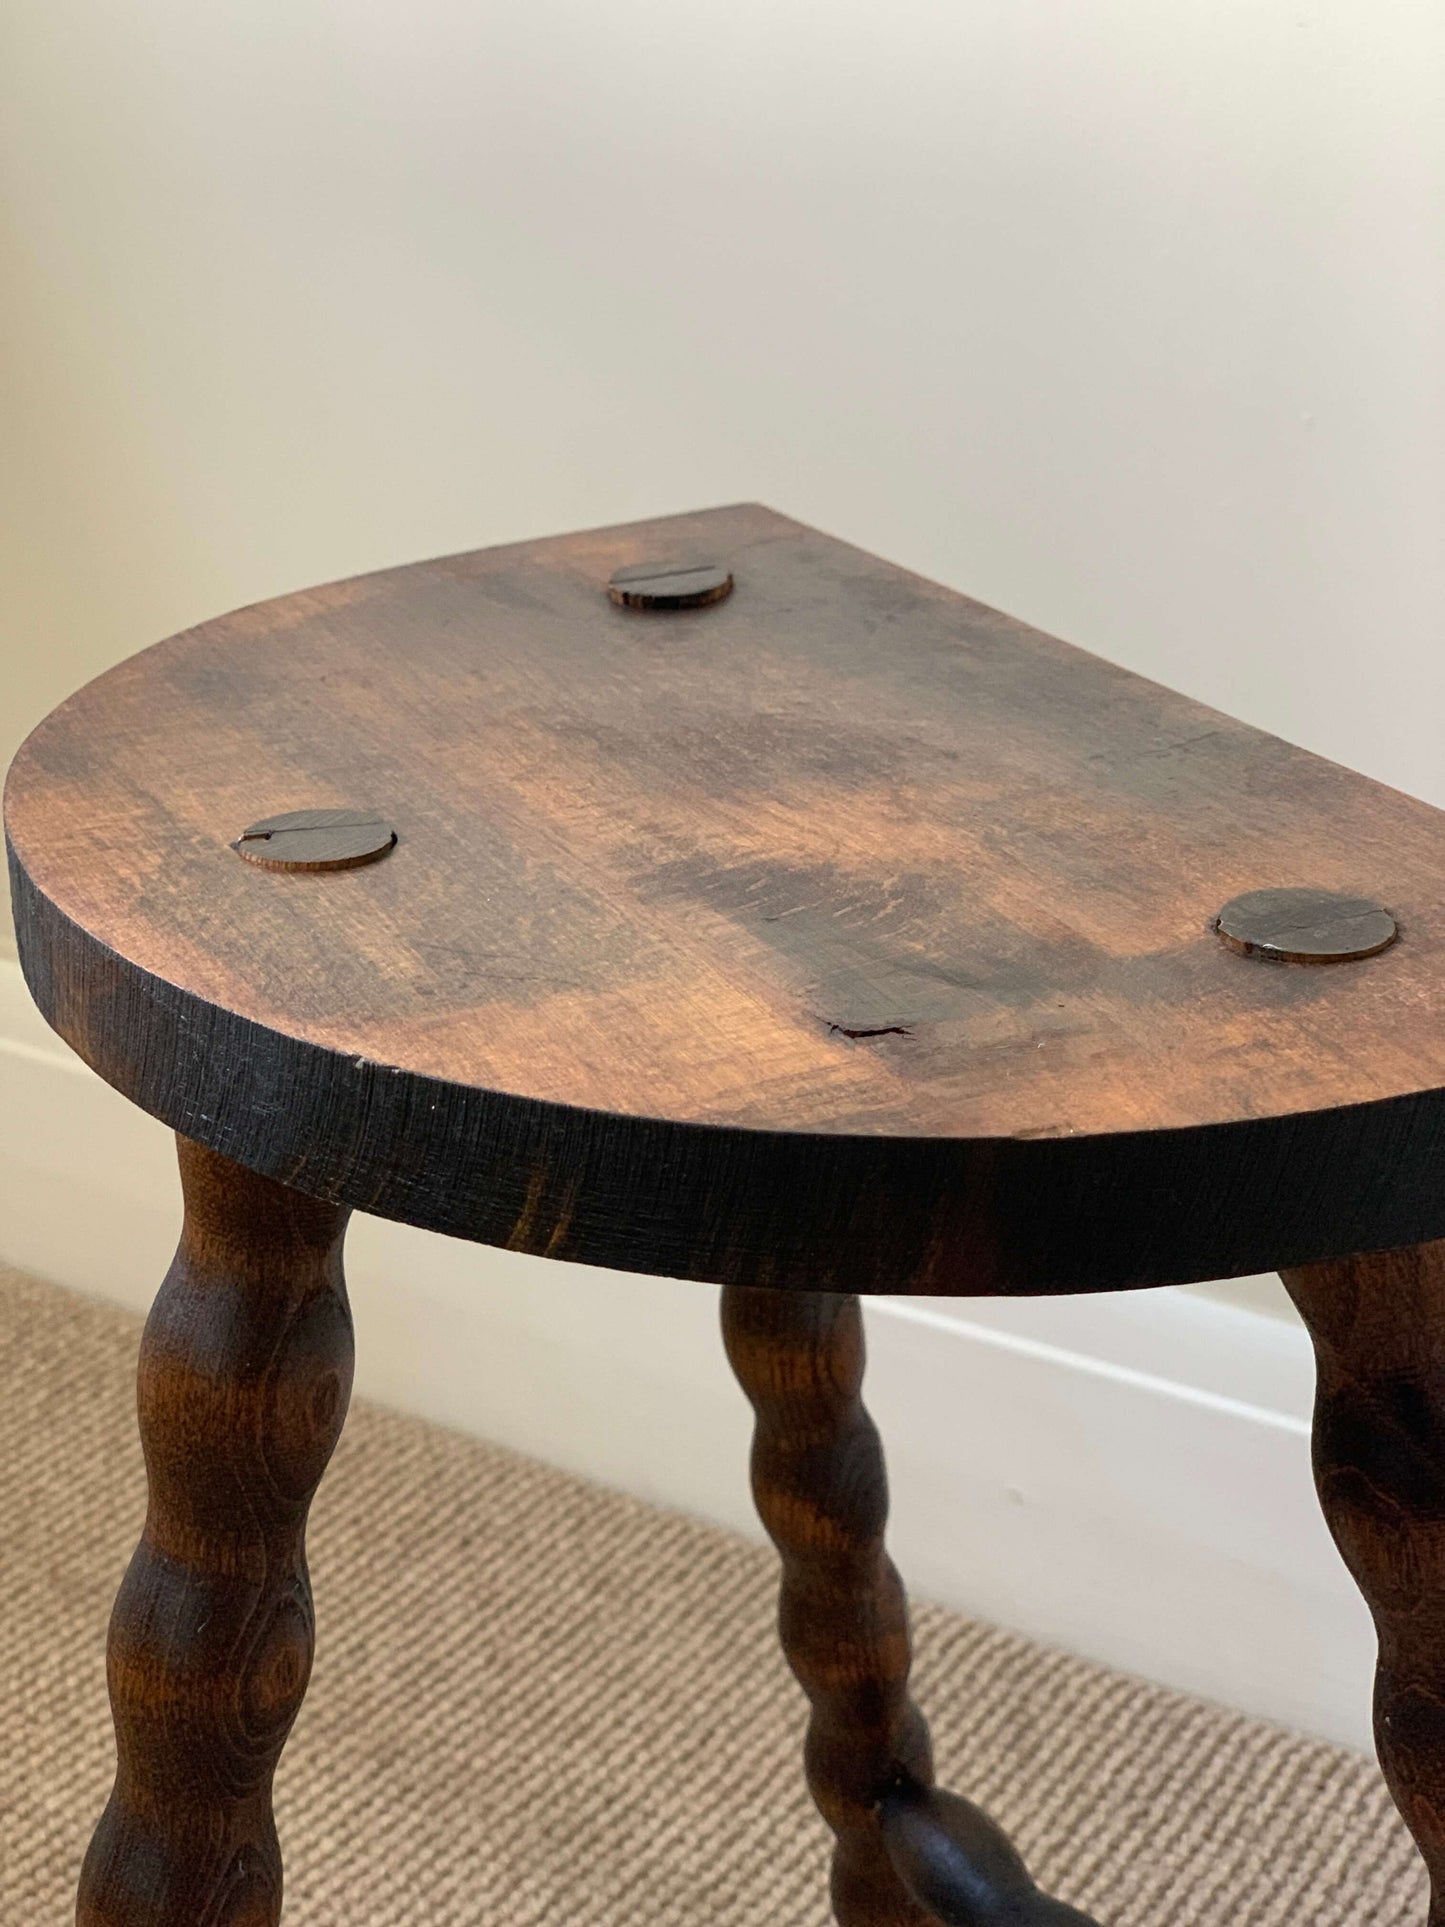 French antique medium-sized bobbin stool